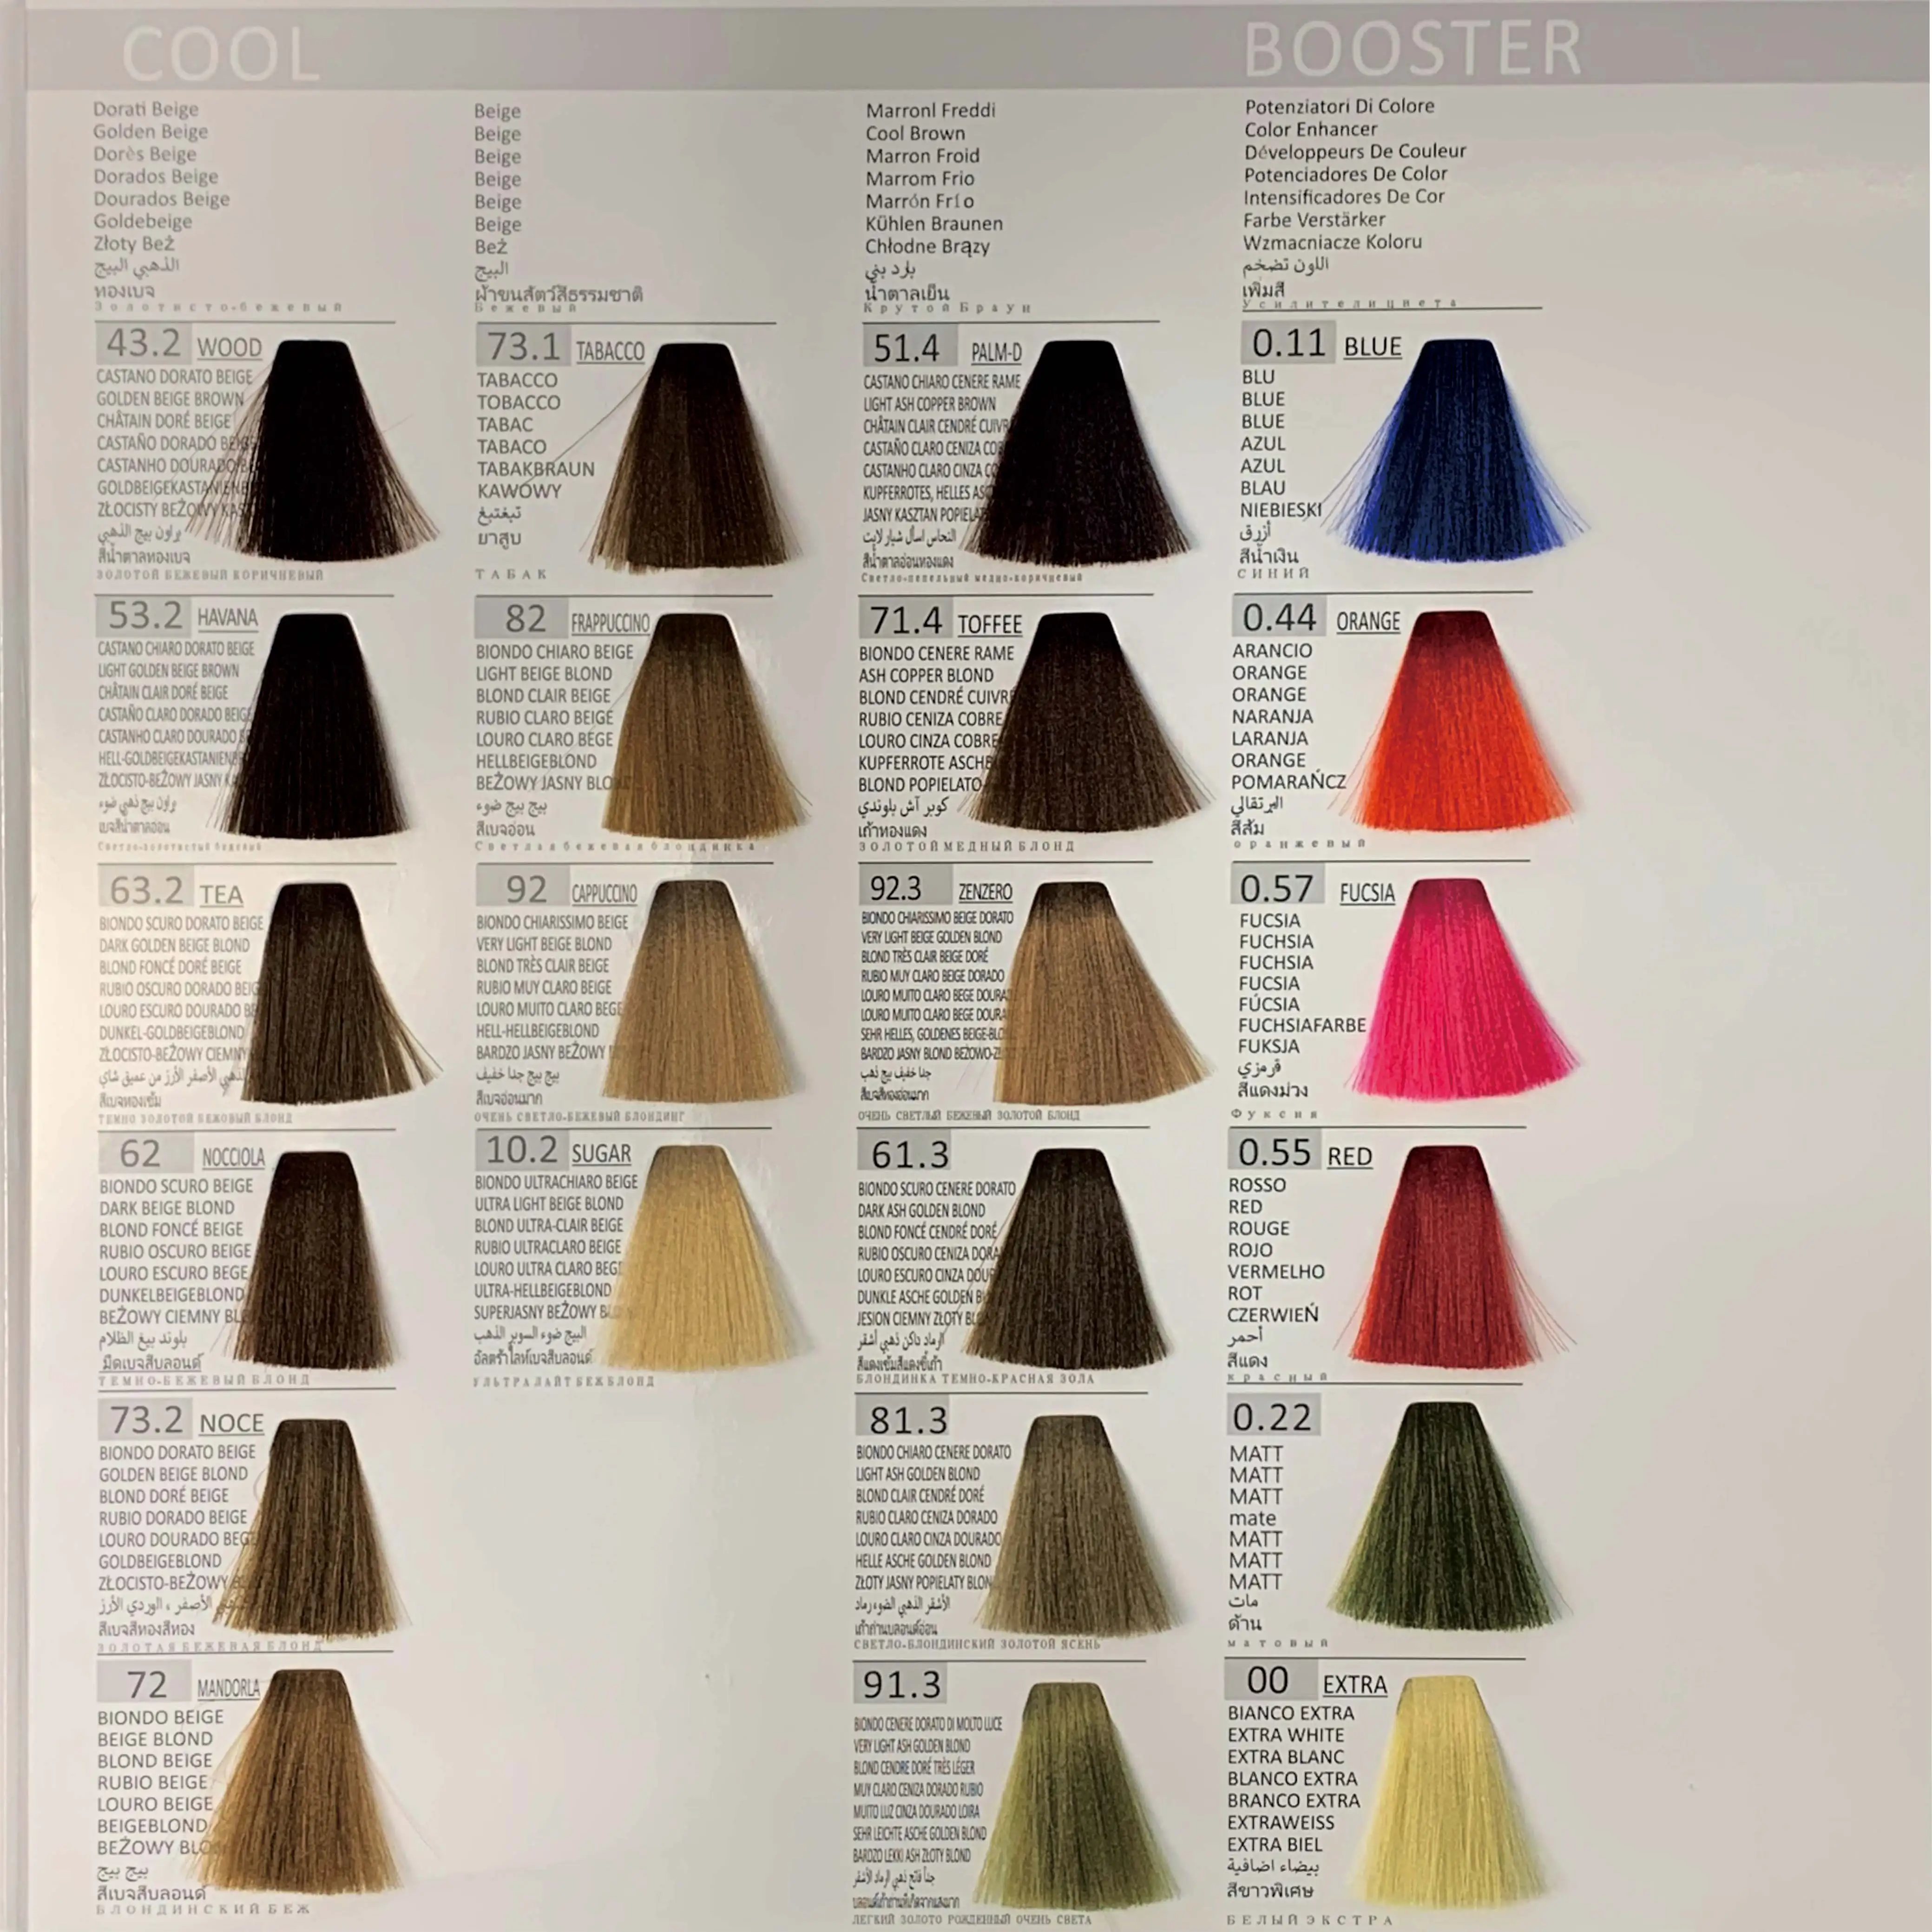 Oem Professional Hair Display Color Chart /hair Coloring Chart - Buy Hair  Coloring Chart,Hair Color Chart,Hair Color Display Product on 